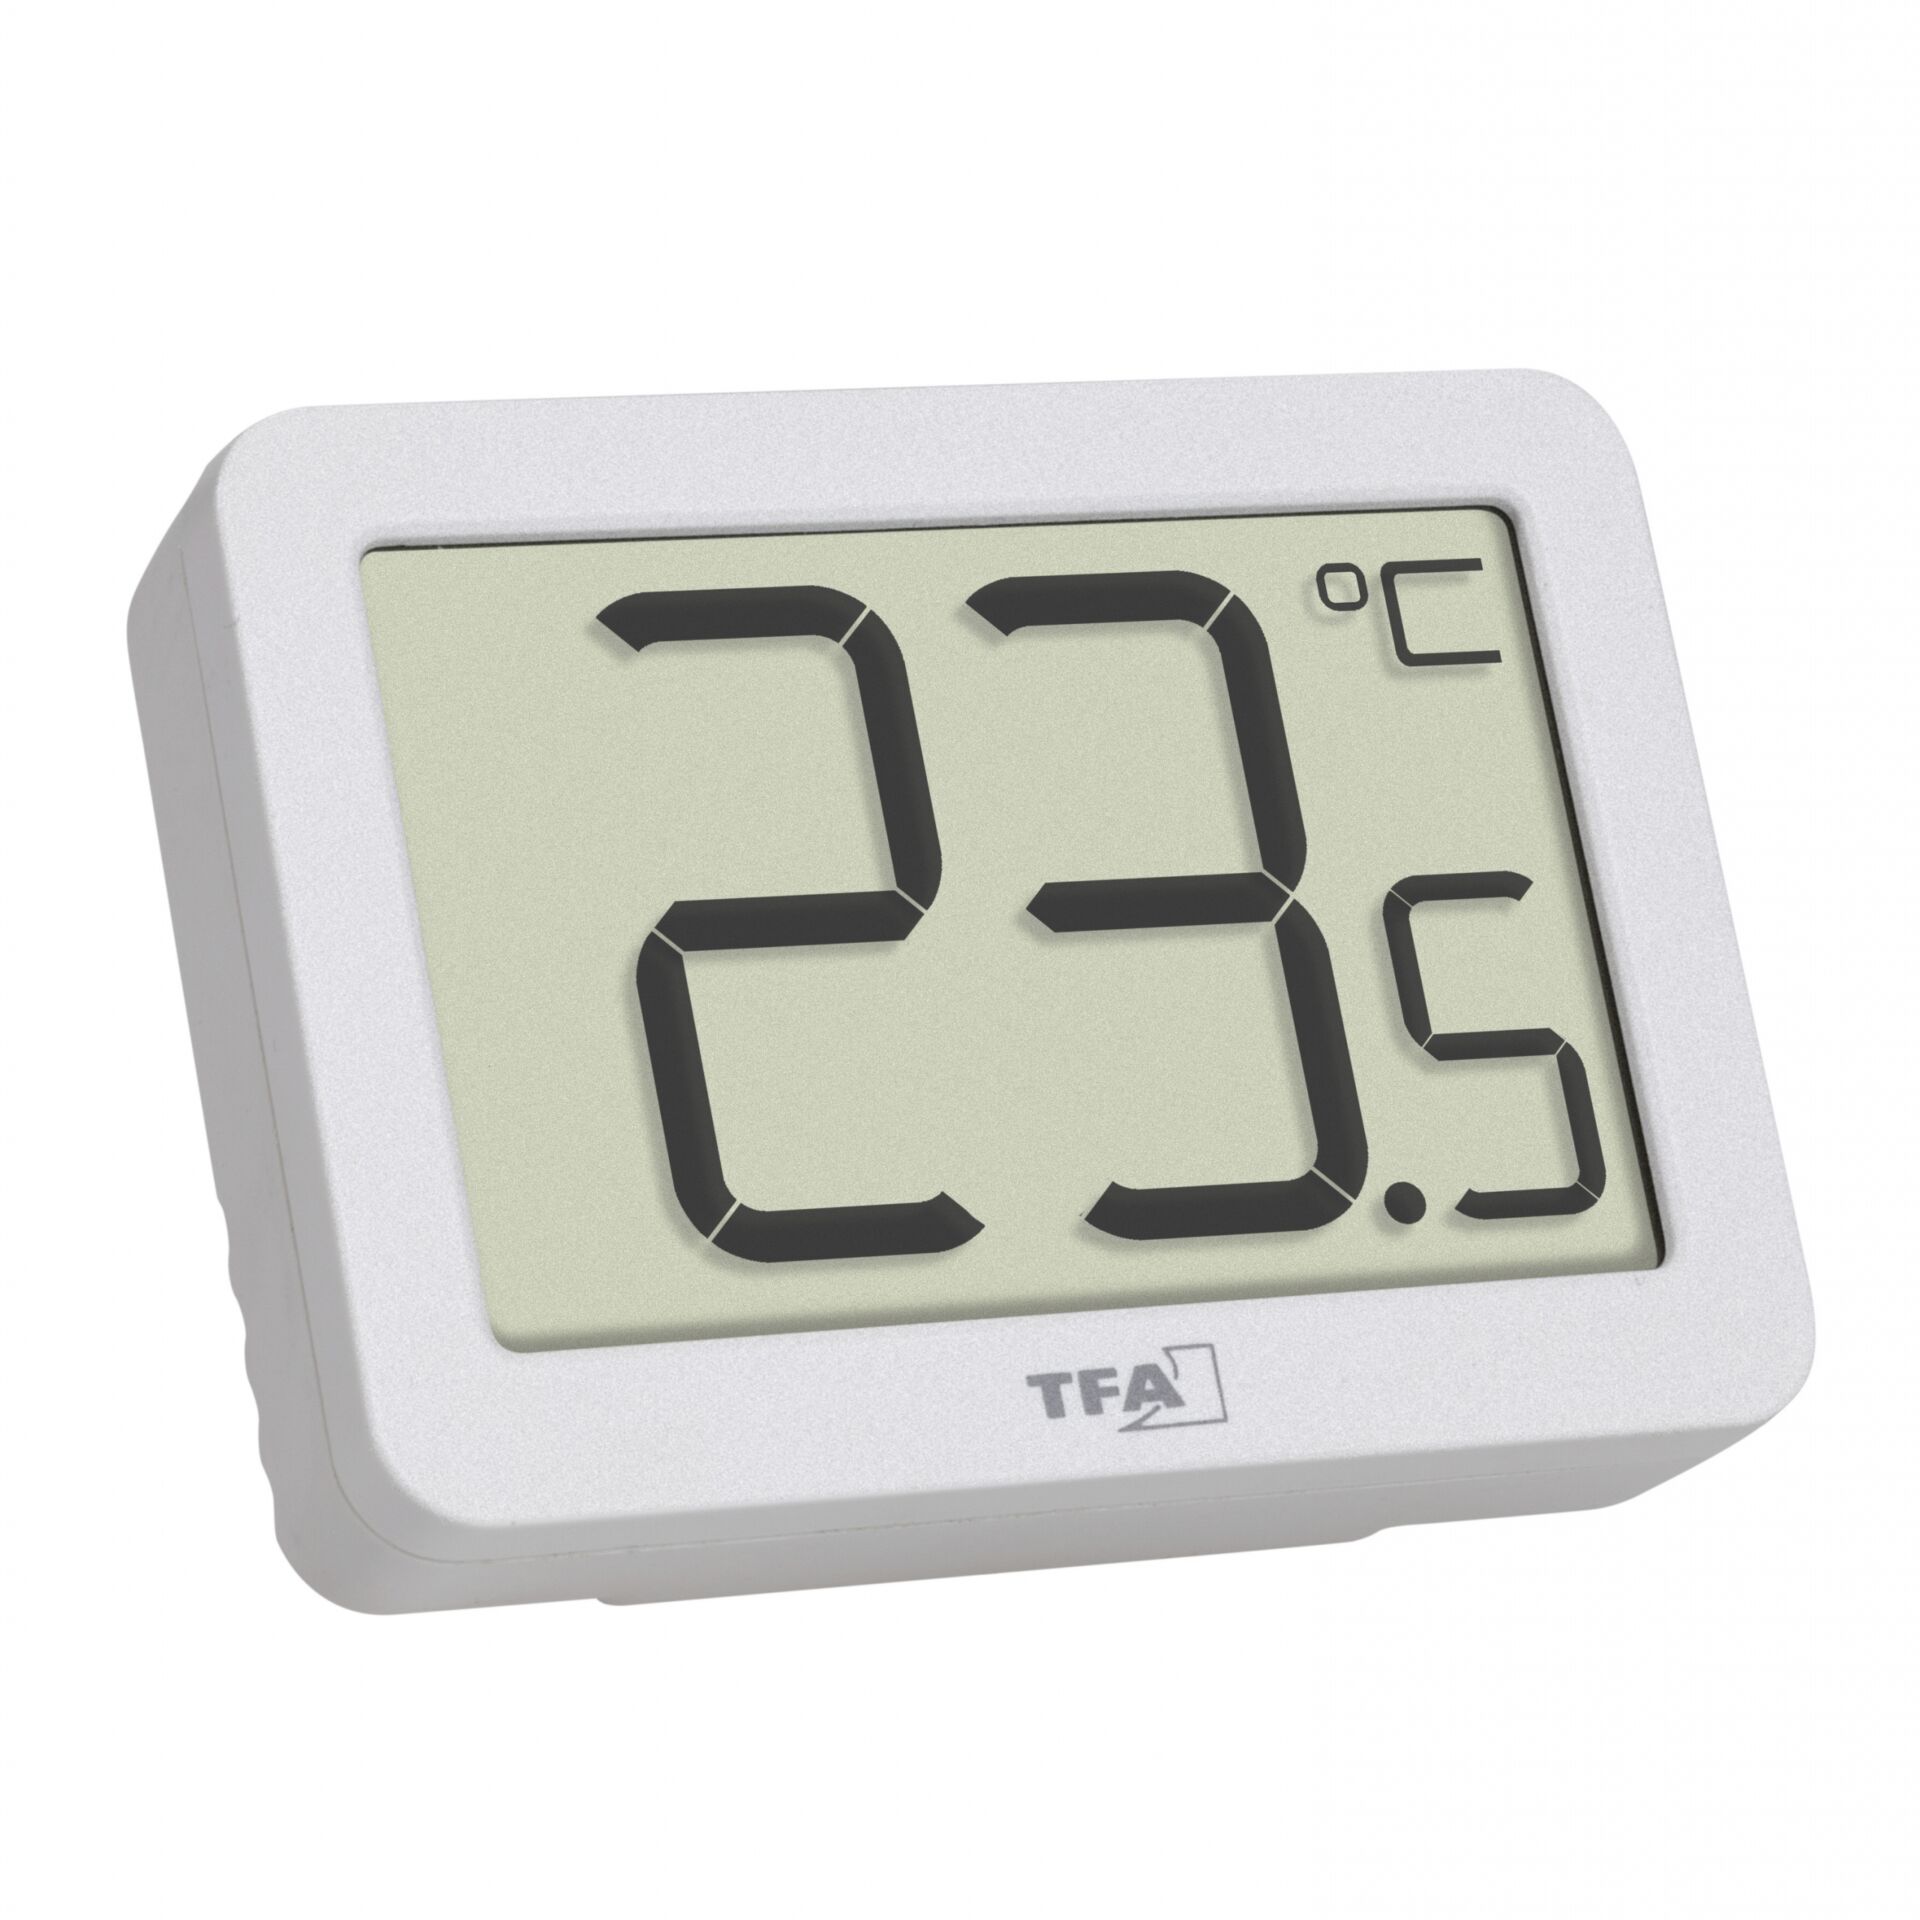 TFA 30.1065 Digital Thermometer